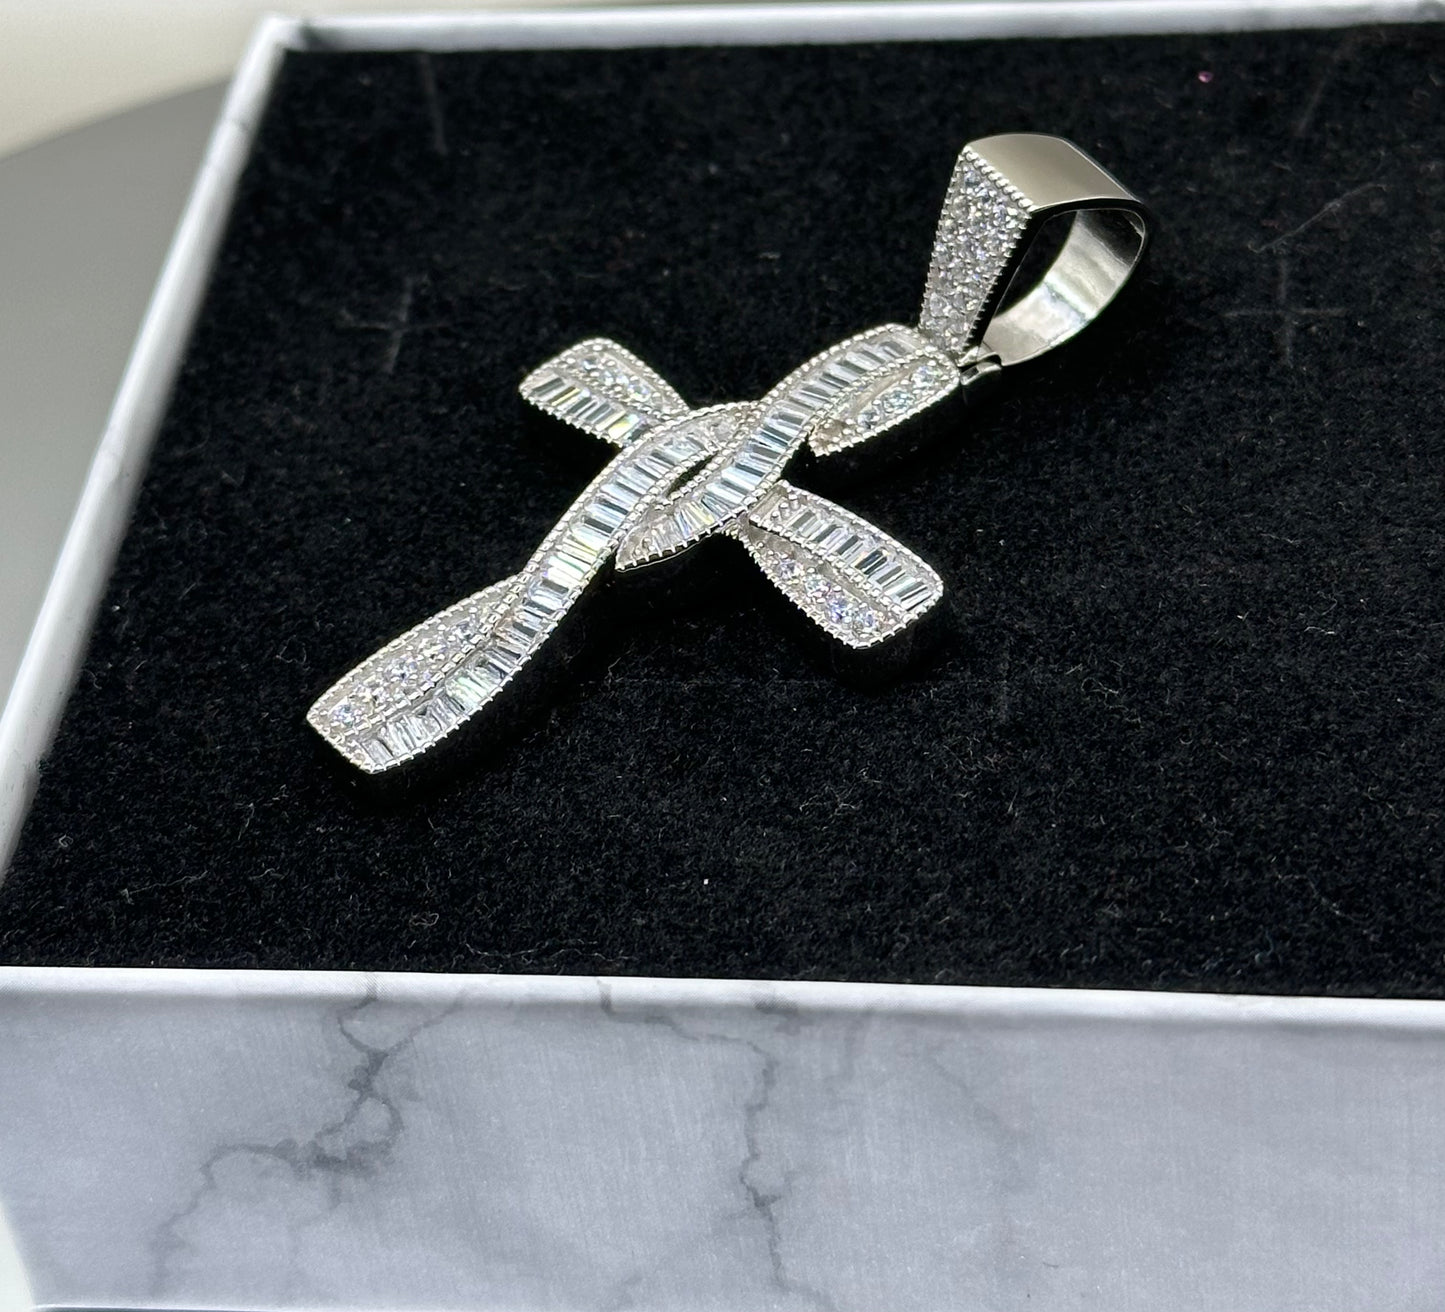 Cruz silver pendant with cubic zirconia